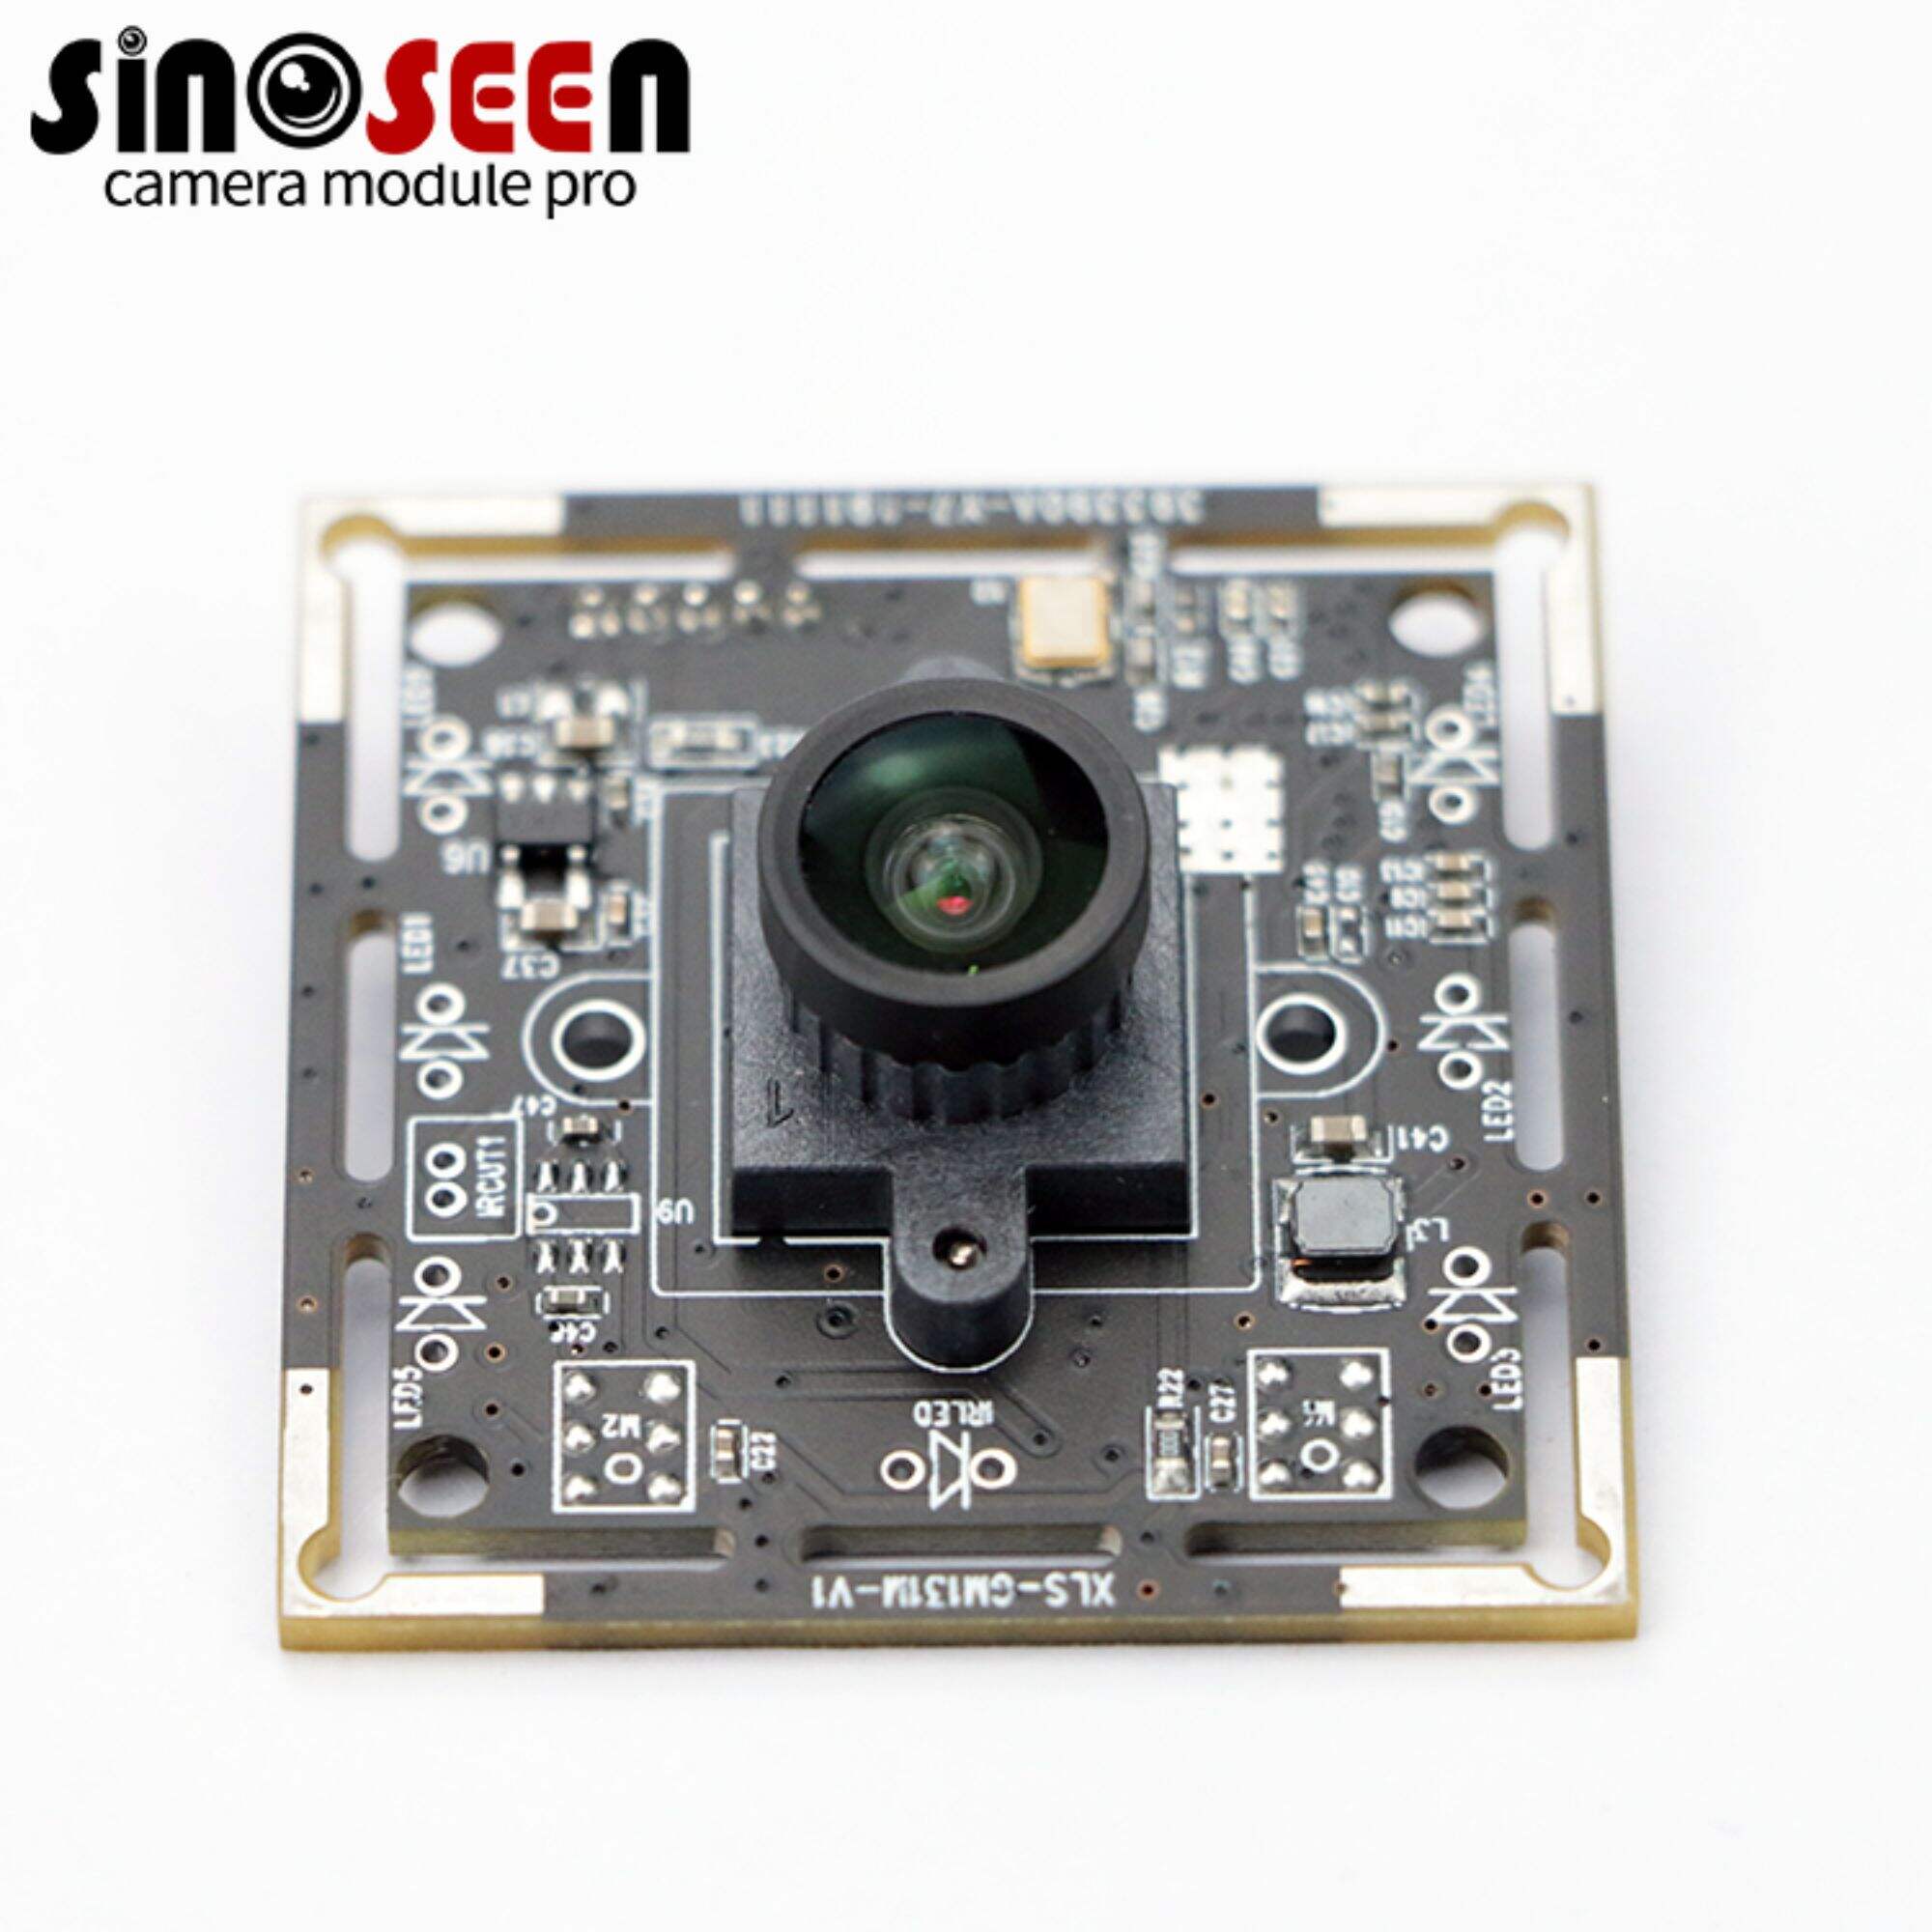 Global Shutter Camera Module in Automotive Systems Monochrome 2MP OG02B1B